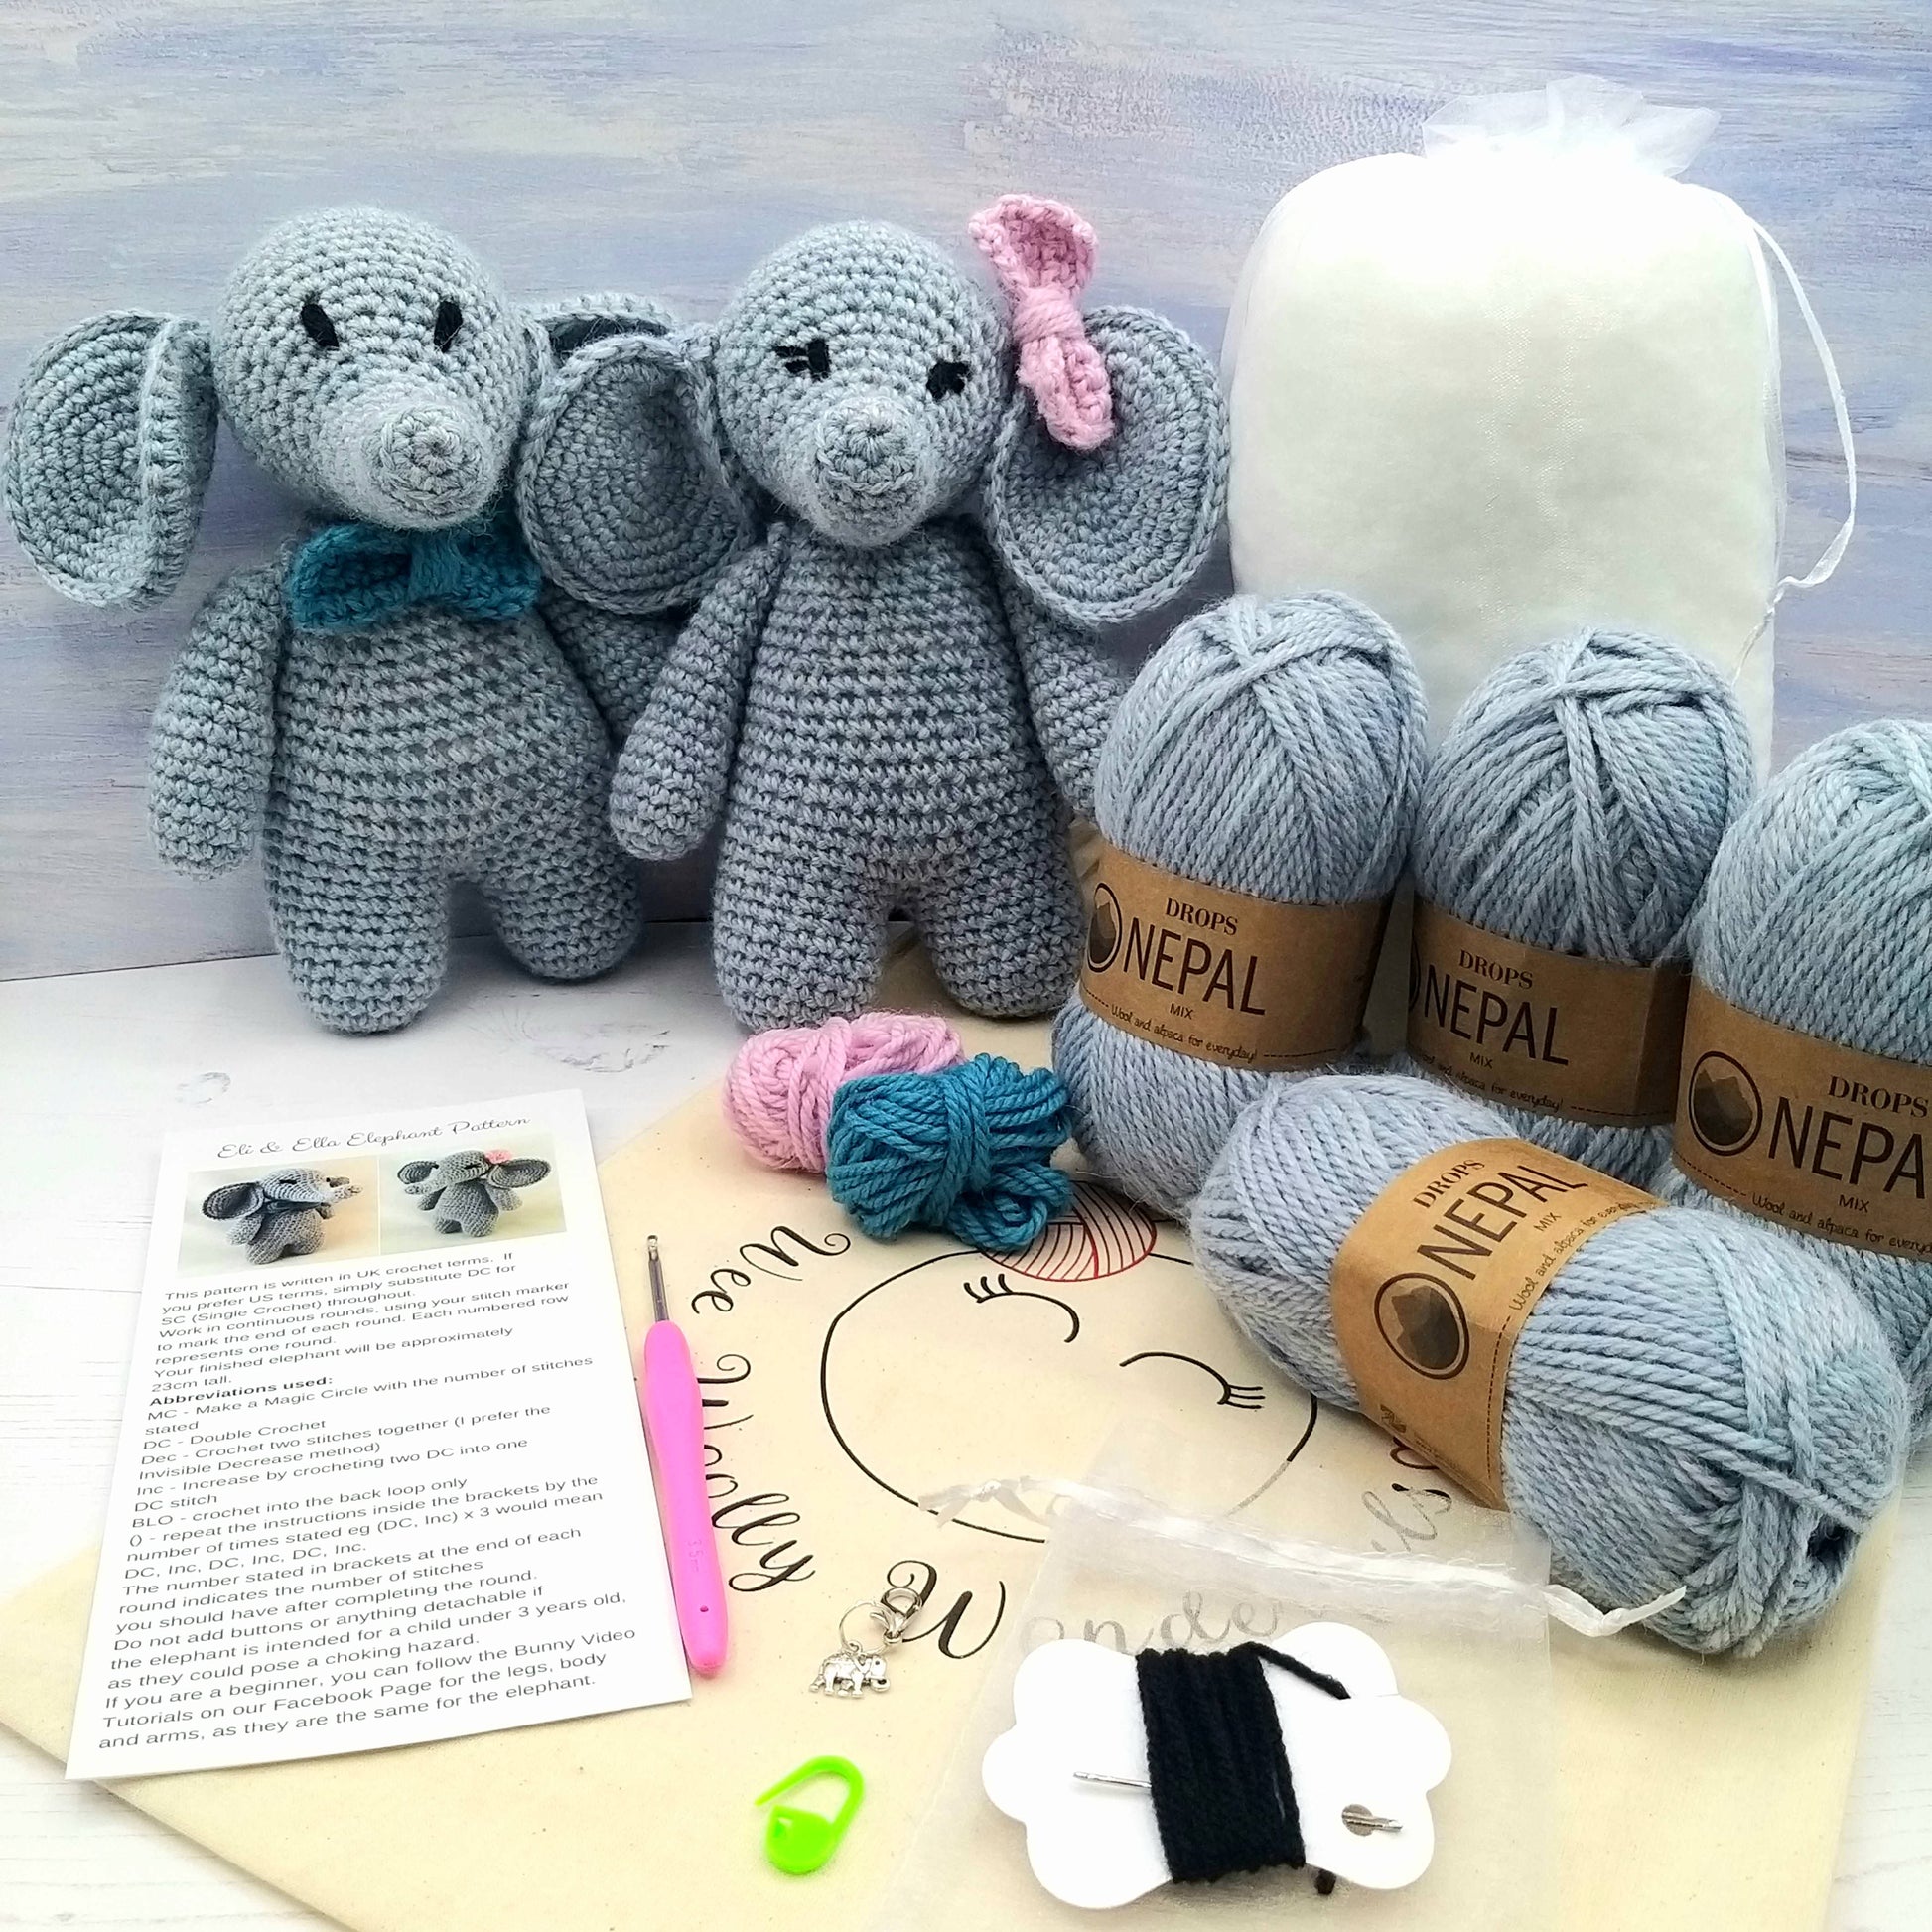 Toy Elephant Crochet Kit for Beginners - full contents